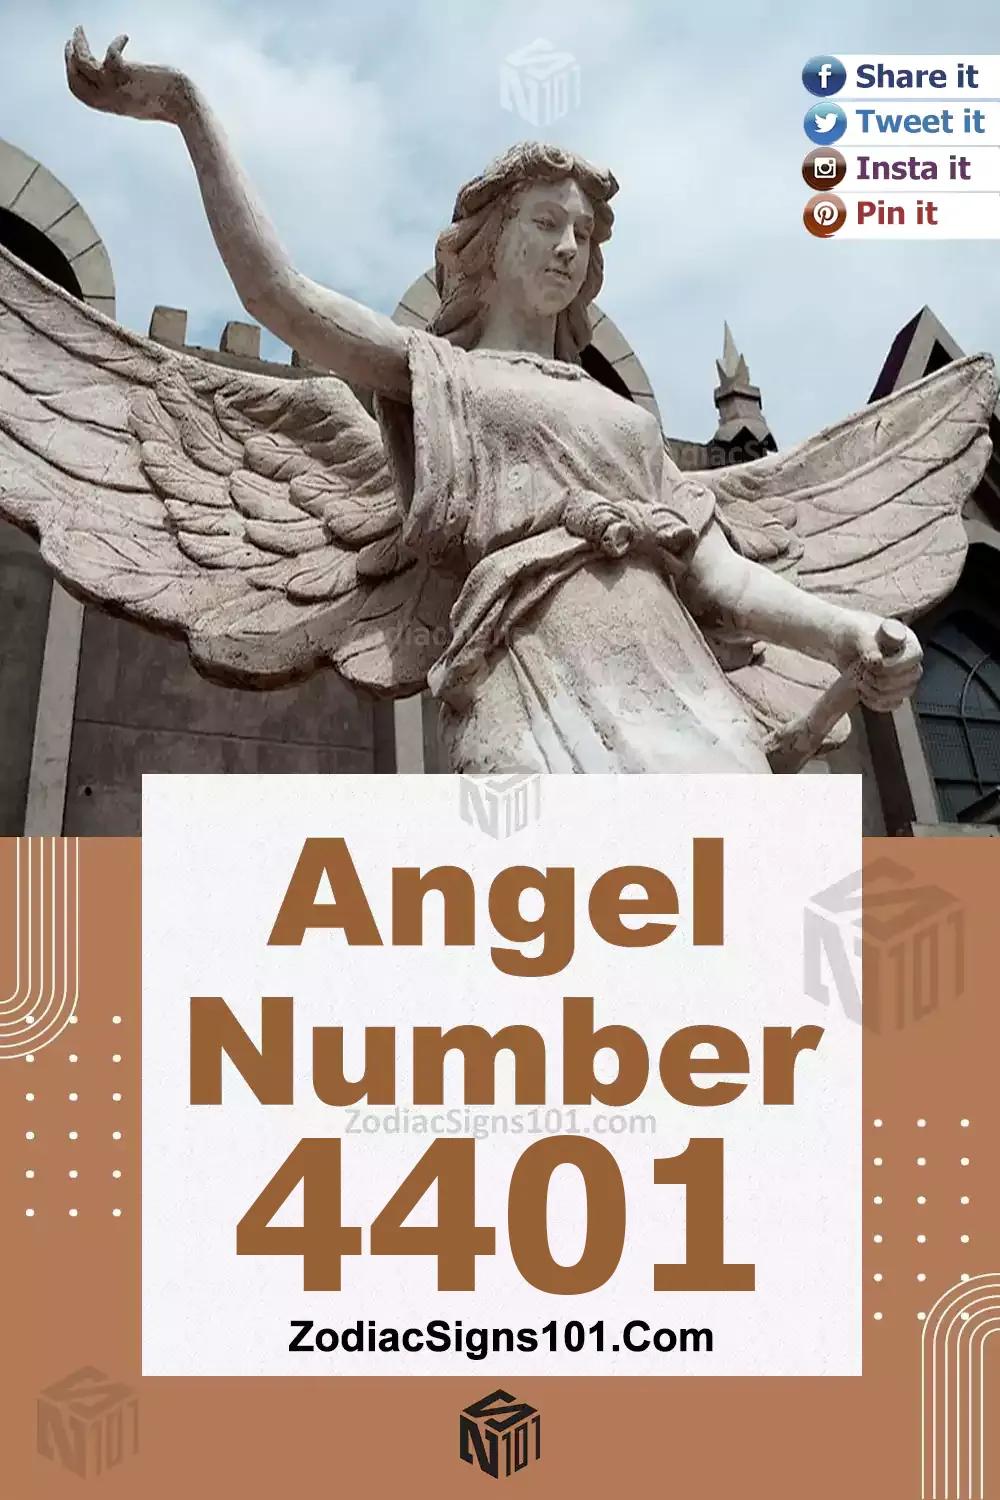 4401-Angel-Number-Meaning.jpg